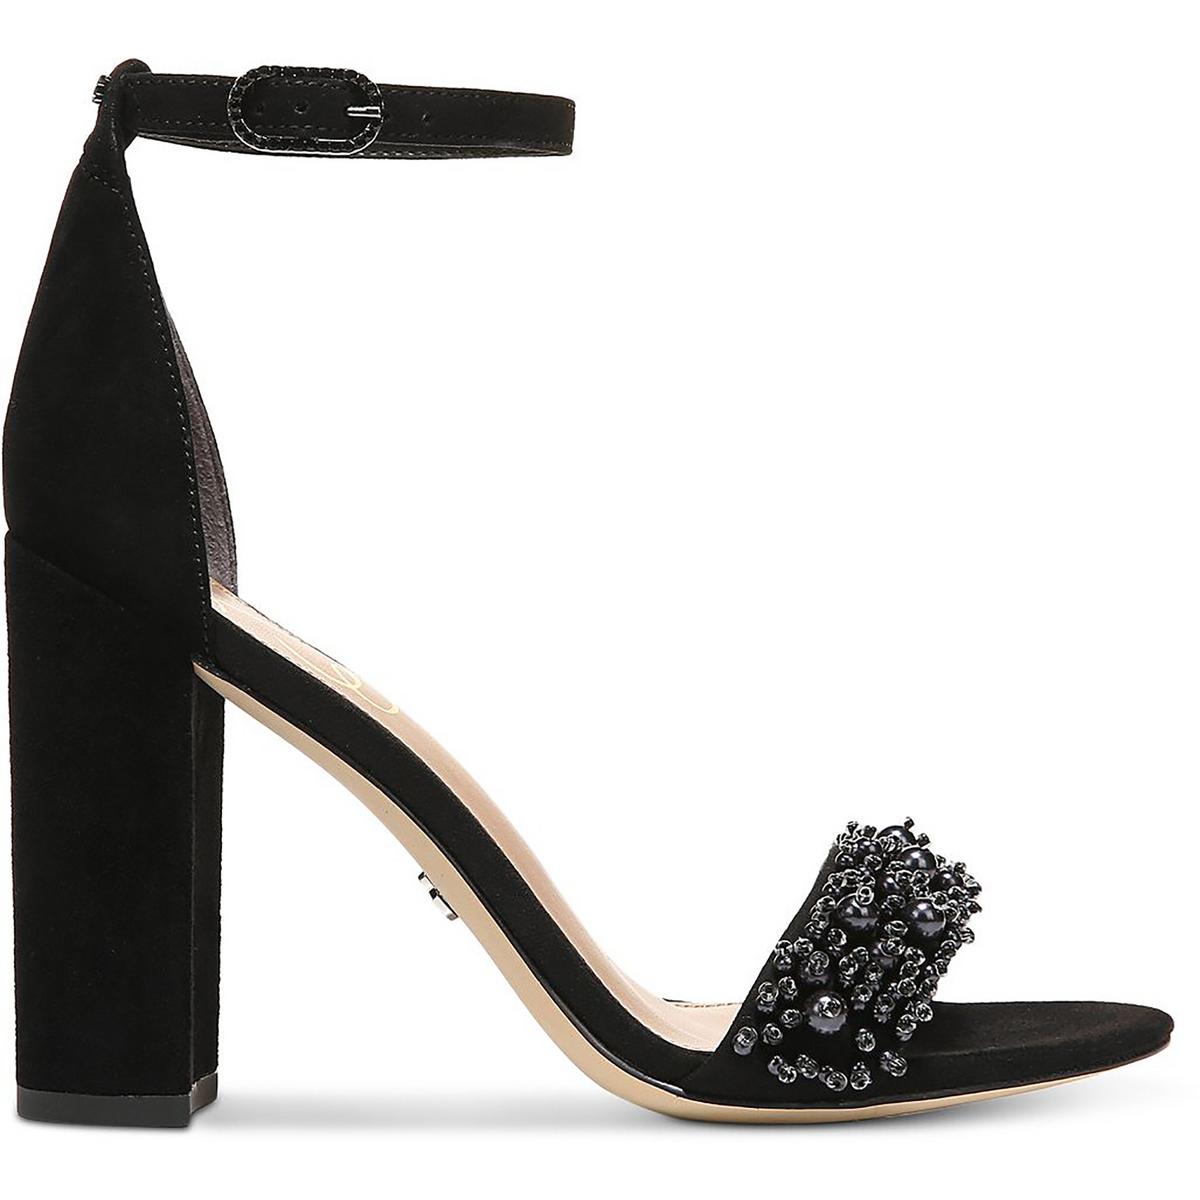 Sam Edelman Solid Black Heels Size 8 - 65% off